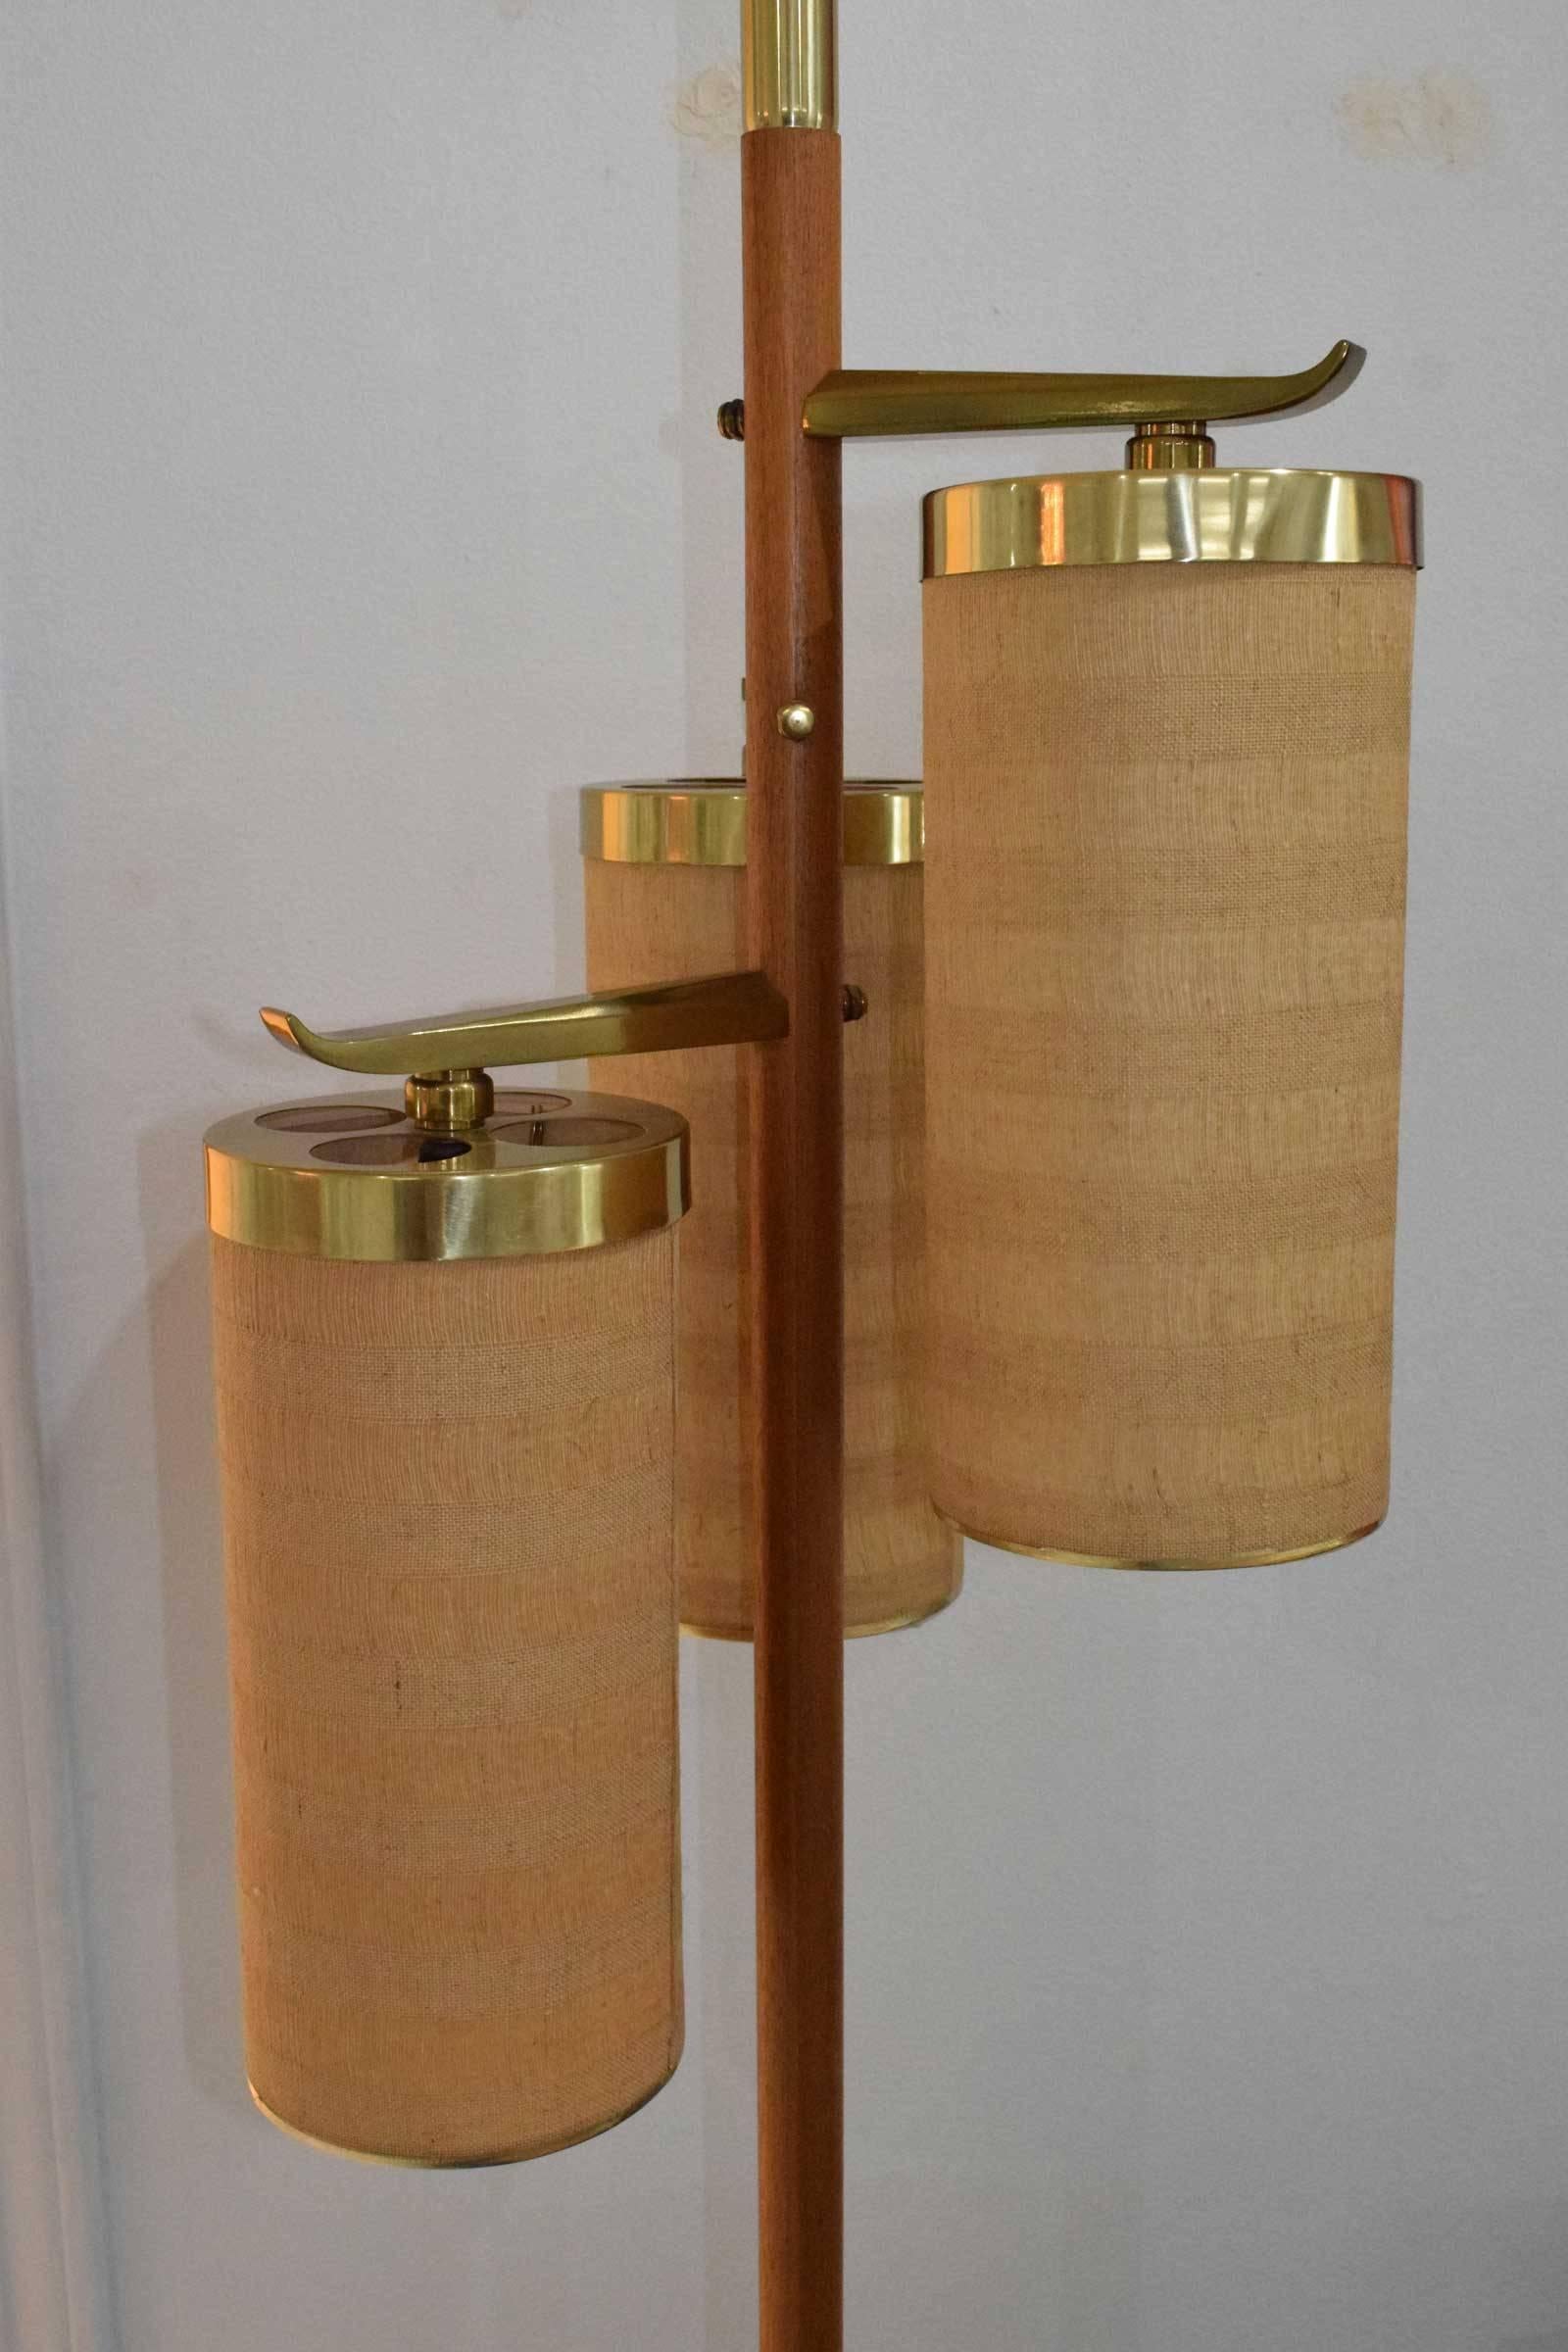 Stiffel Tension Pole Floor Lamp At 1stdibs, Stiffel Tension Pole Floor Lamp